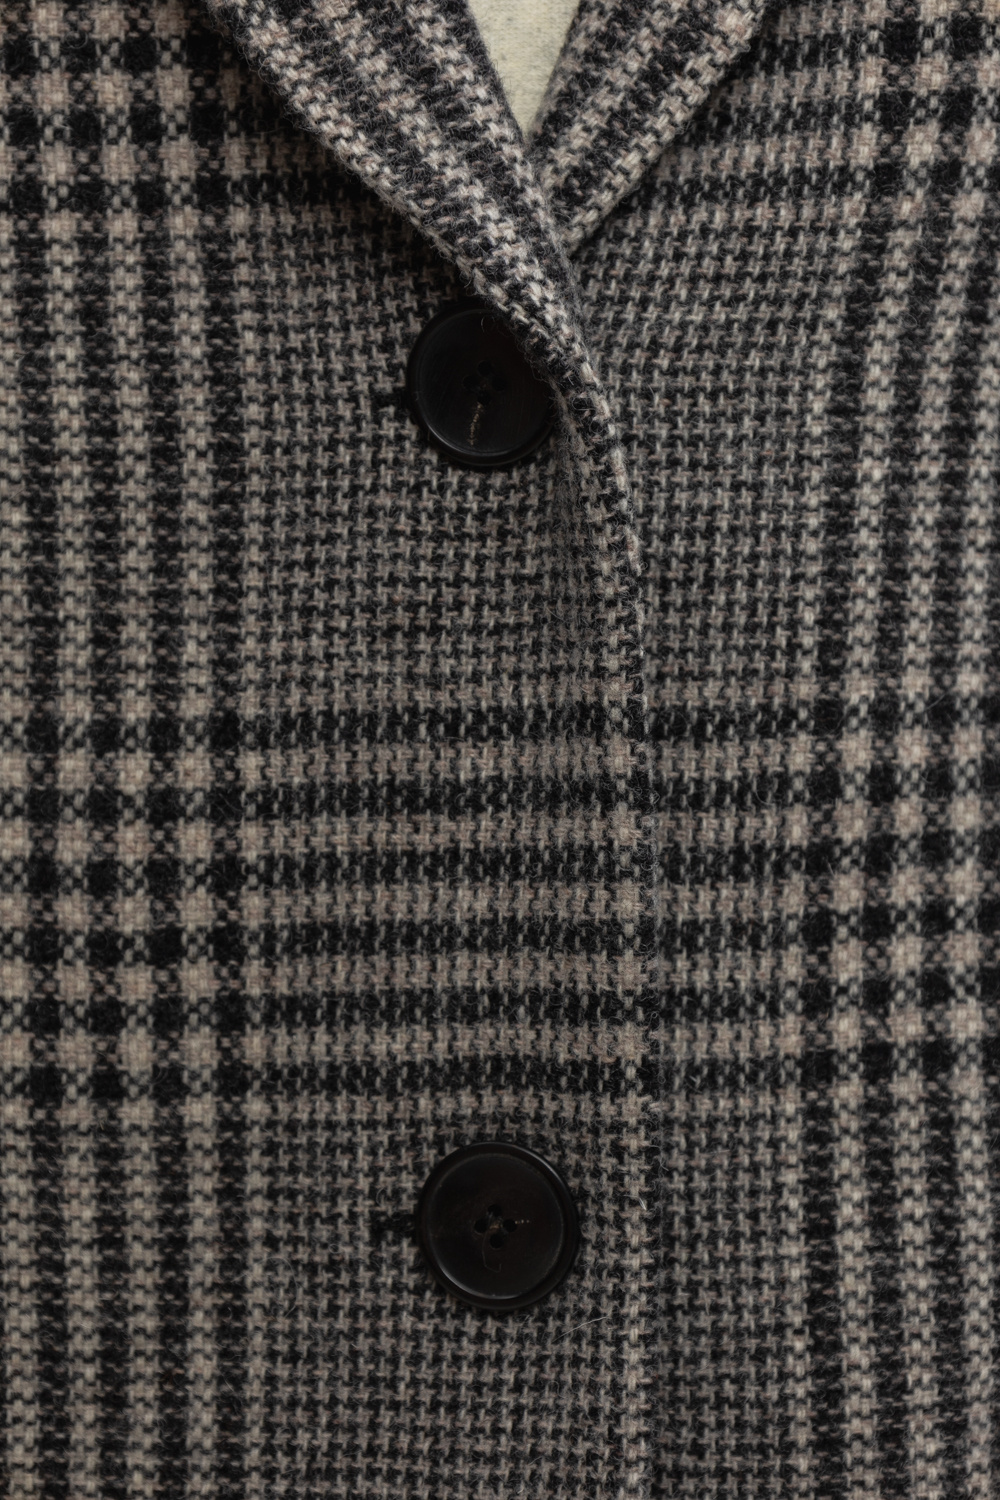 Tyag suede shoulder bag ‘Limiza’ wool coat